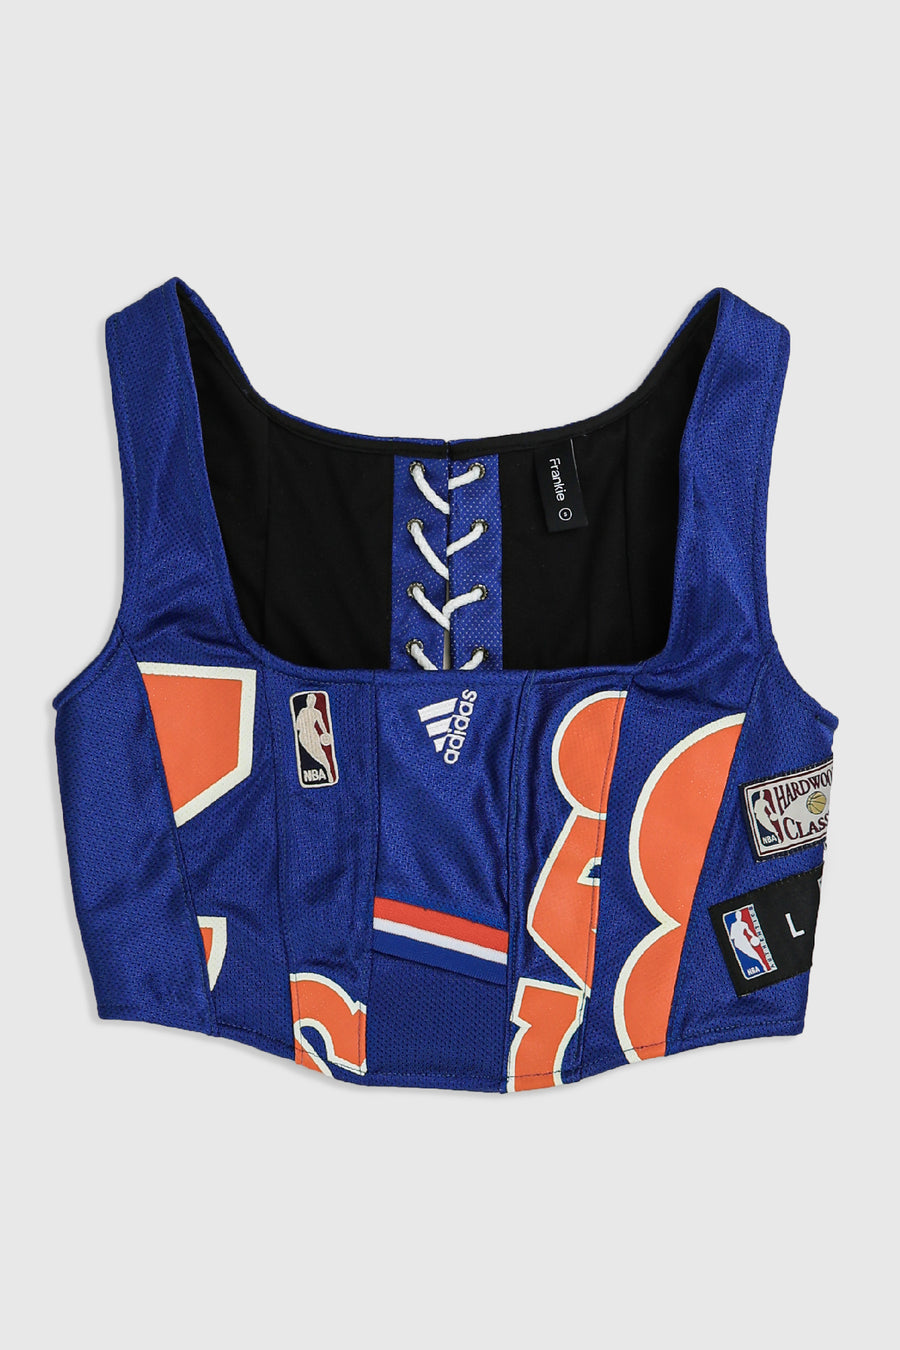 Rework Knicks NBA Corset - S